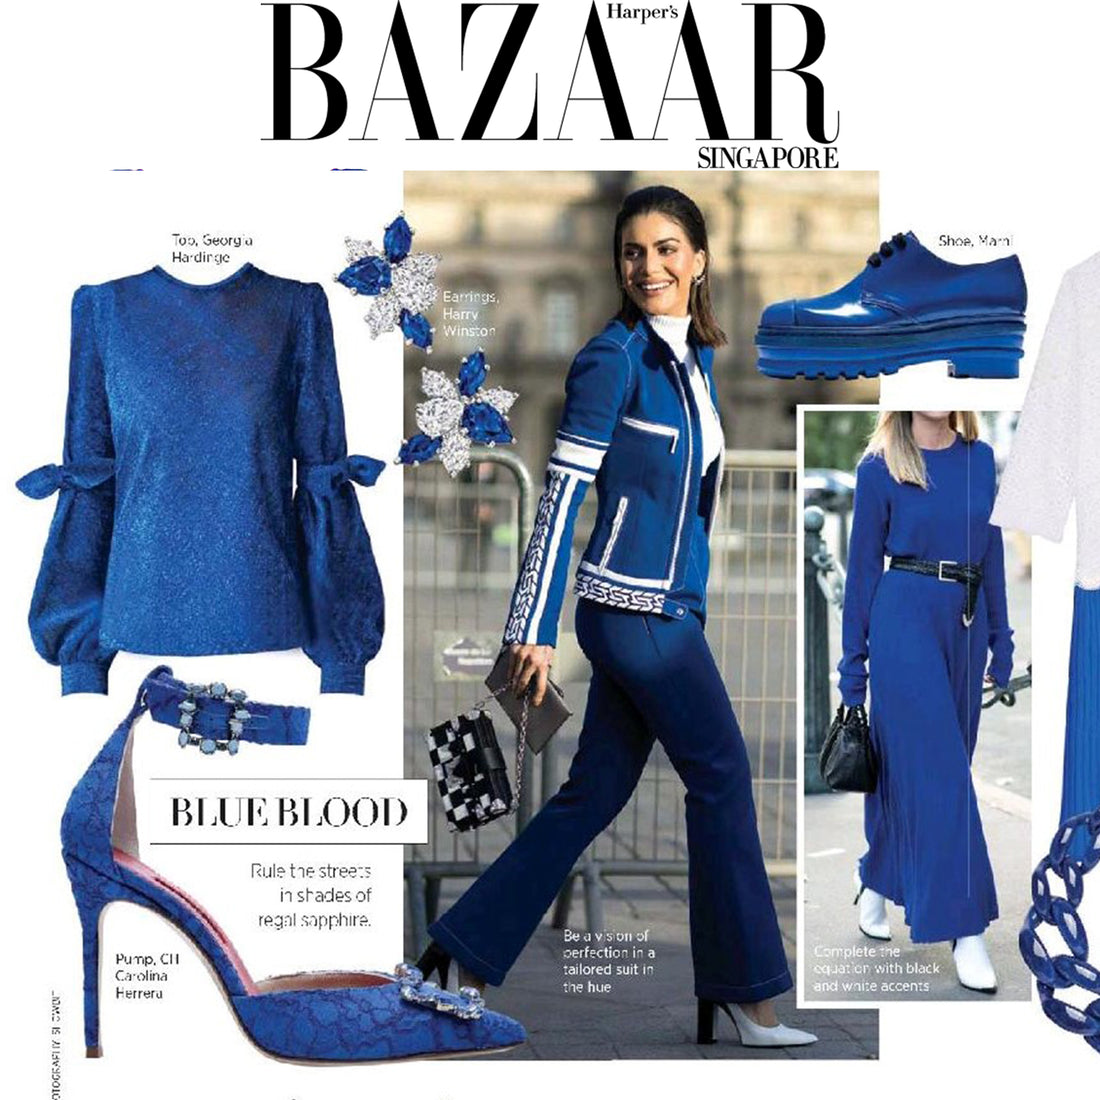 SS18 Cobalt Zinnia Blouse featured by Harpers Bazaar Singapore